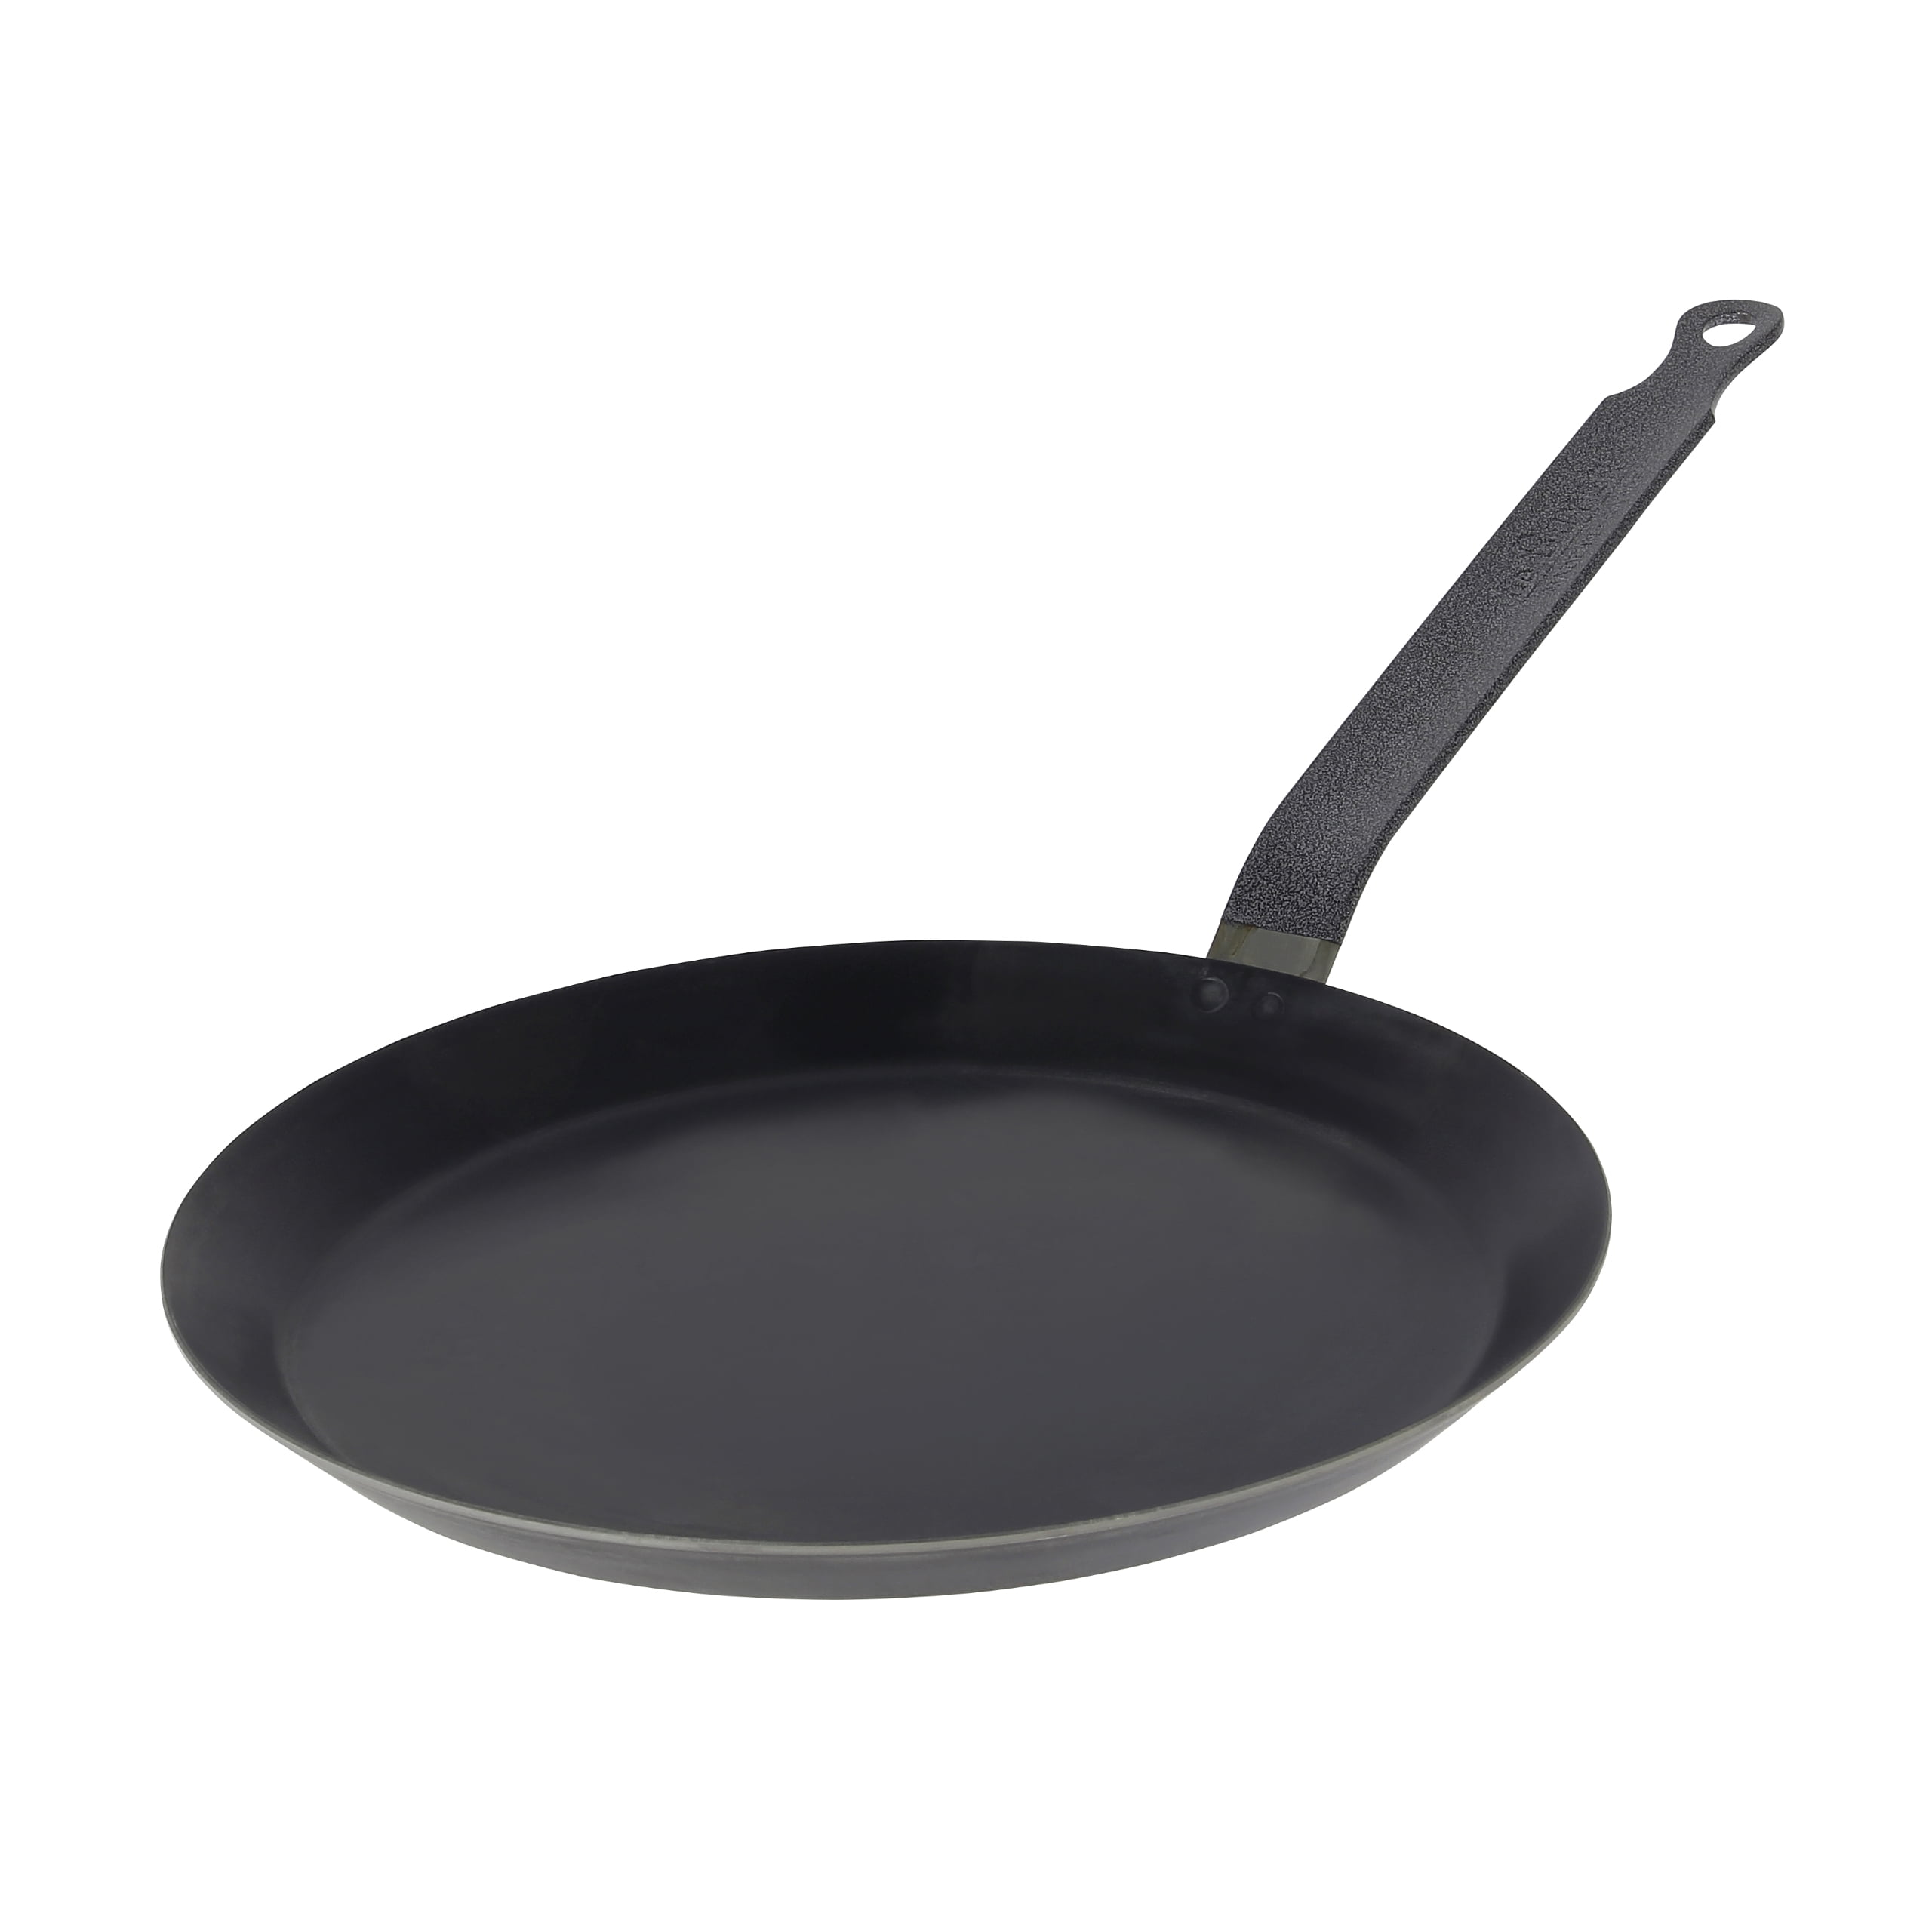 de Buyer Choc Non-Stick Crepe Pan